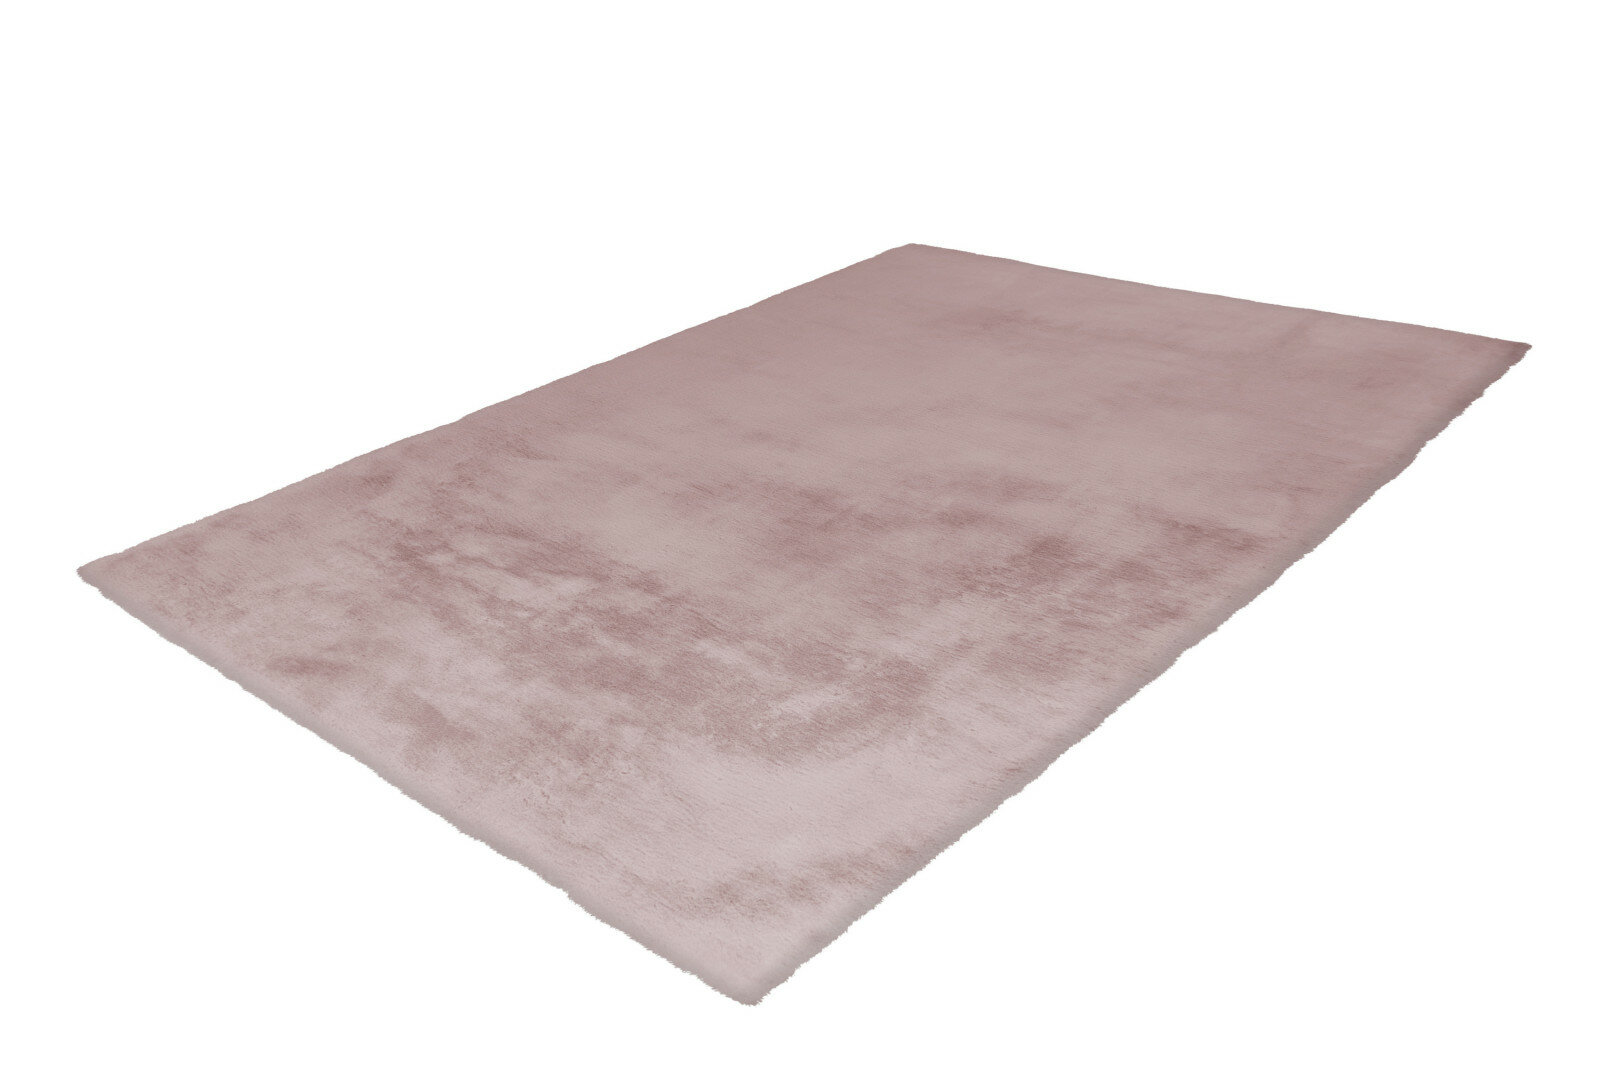 Kunstfell-Teppich - Kaninchenfell-Haptik - rosa - 160x230 cm | Online bei  ROLLER kaufen